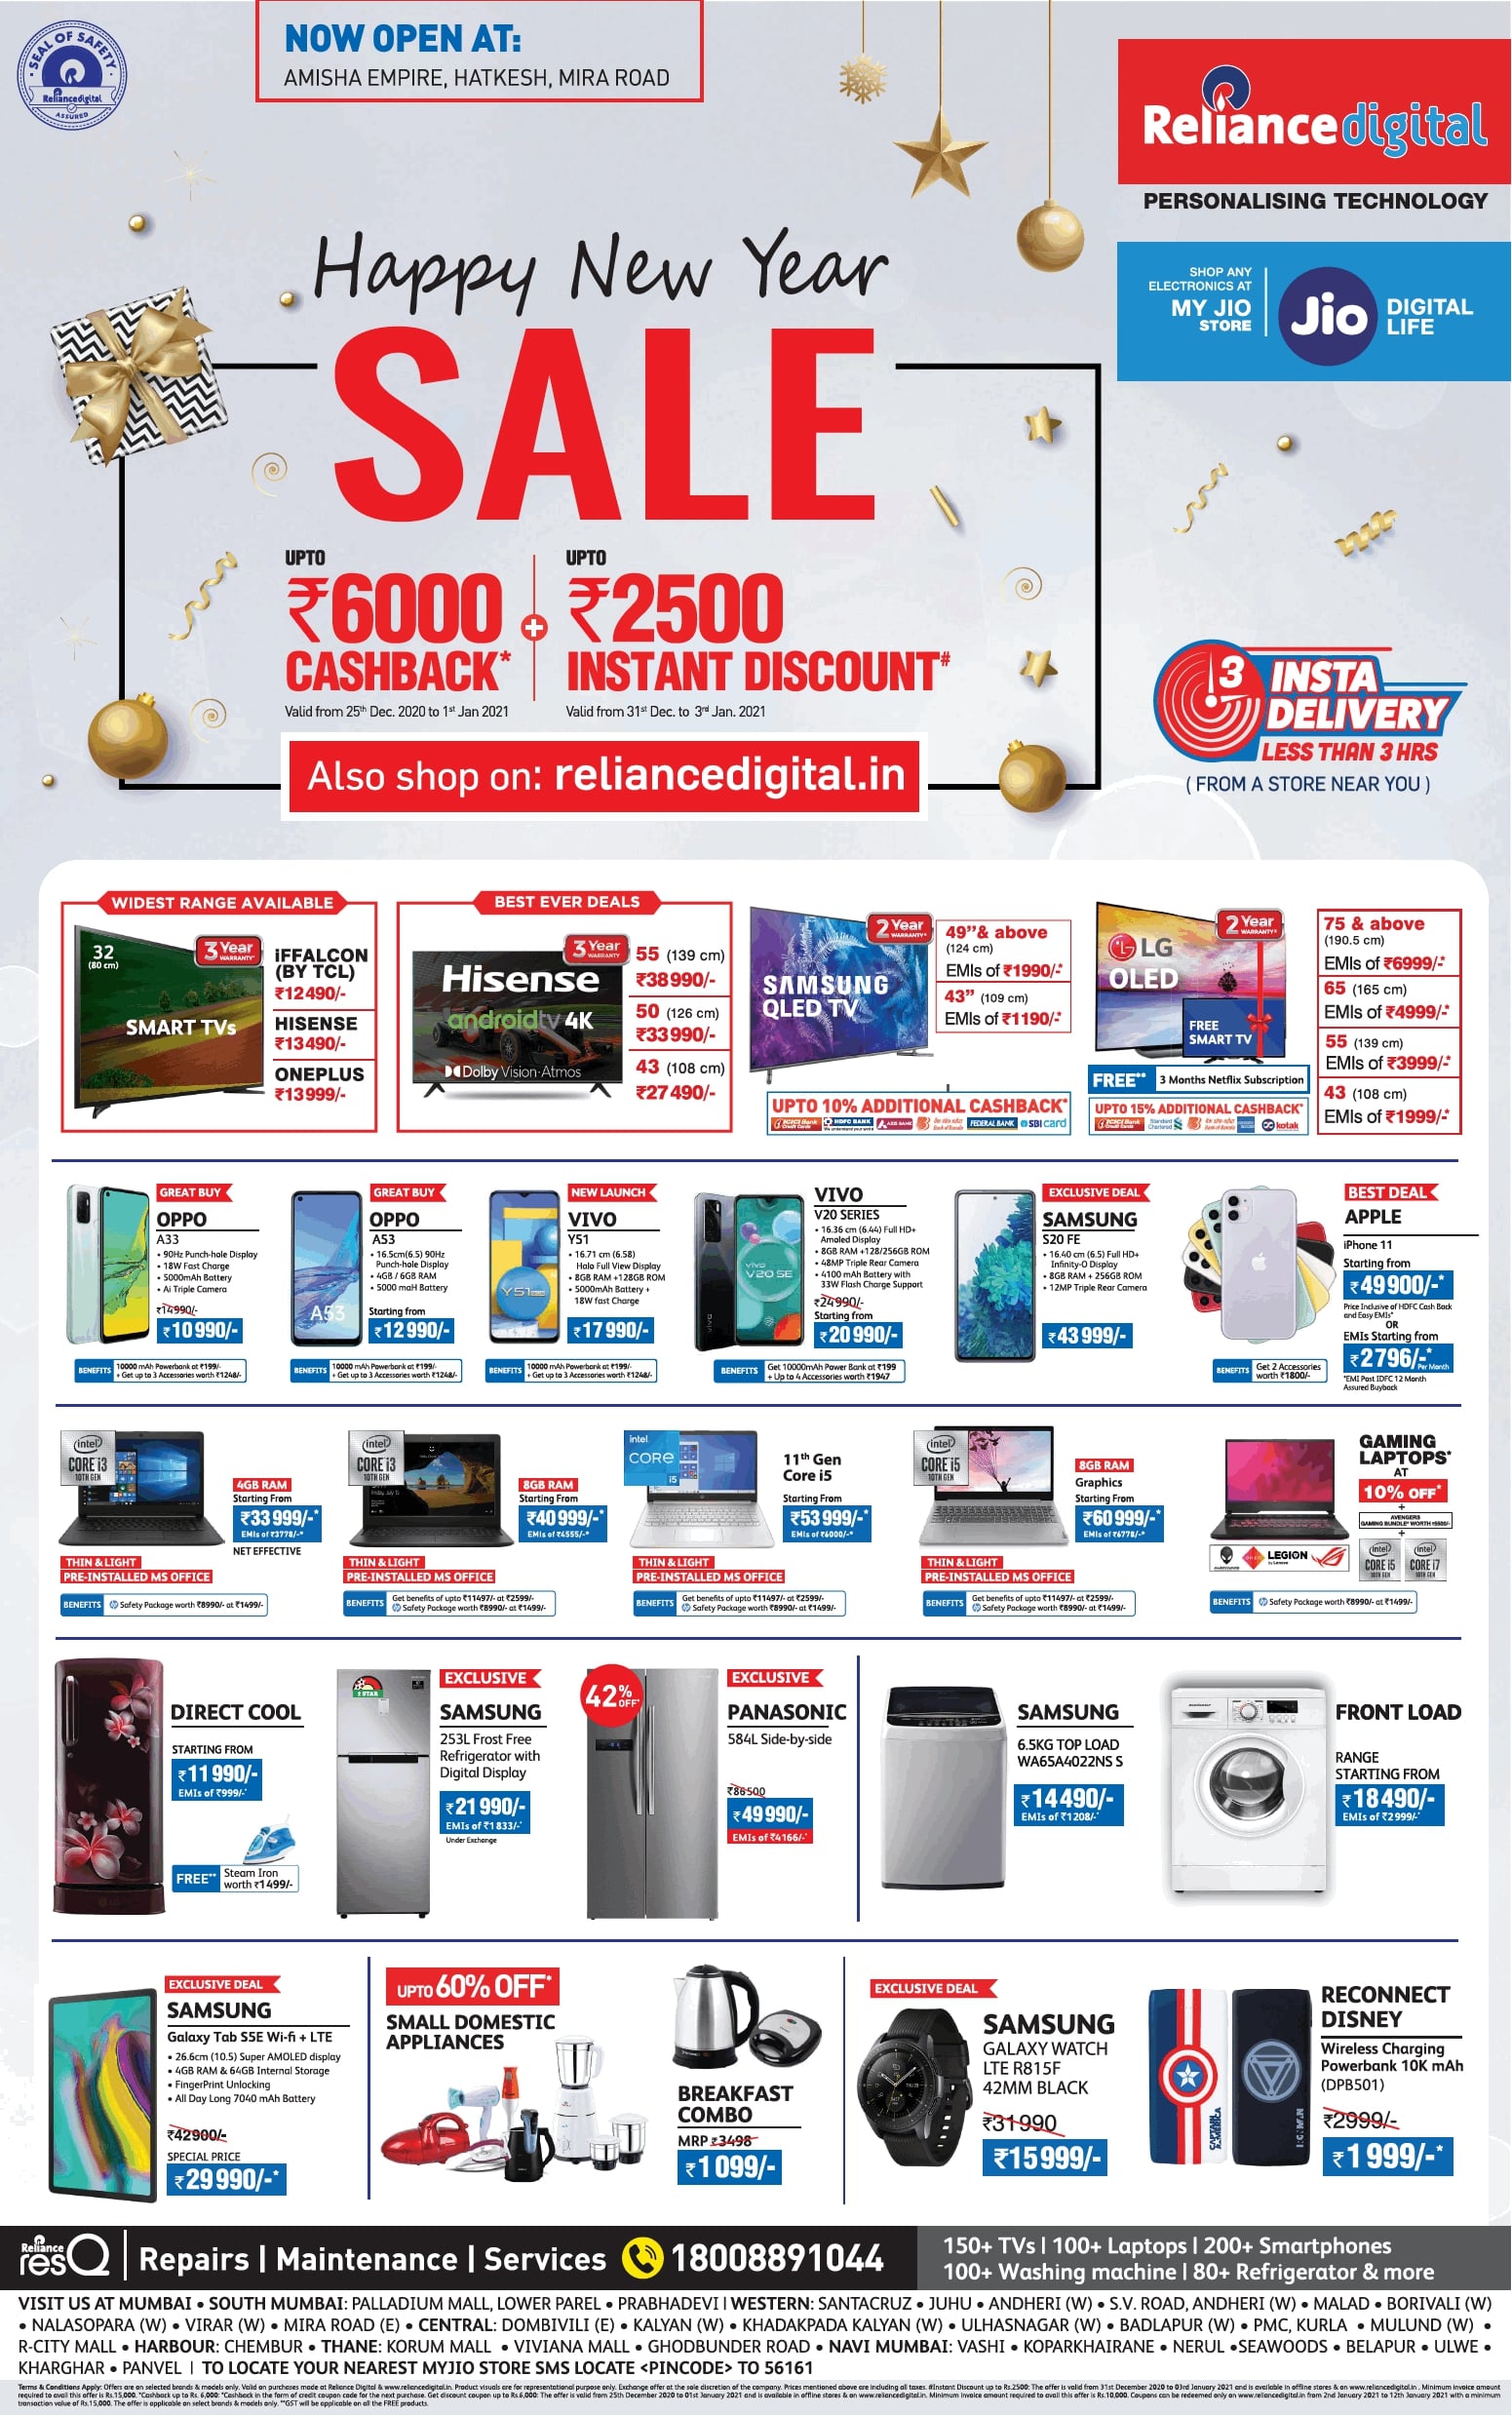 reliance-digital-happy-new-year-sale-upto-rupees-6000-cashback-ad-times-of-india-mumbai-01-01-2021